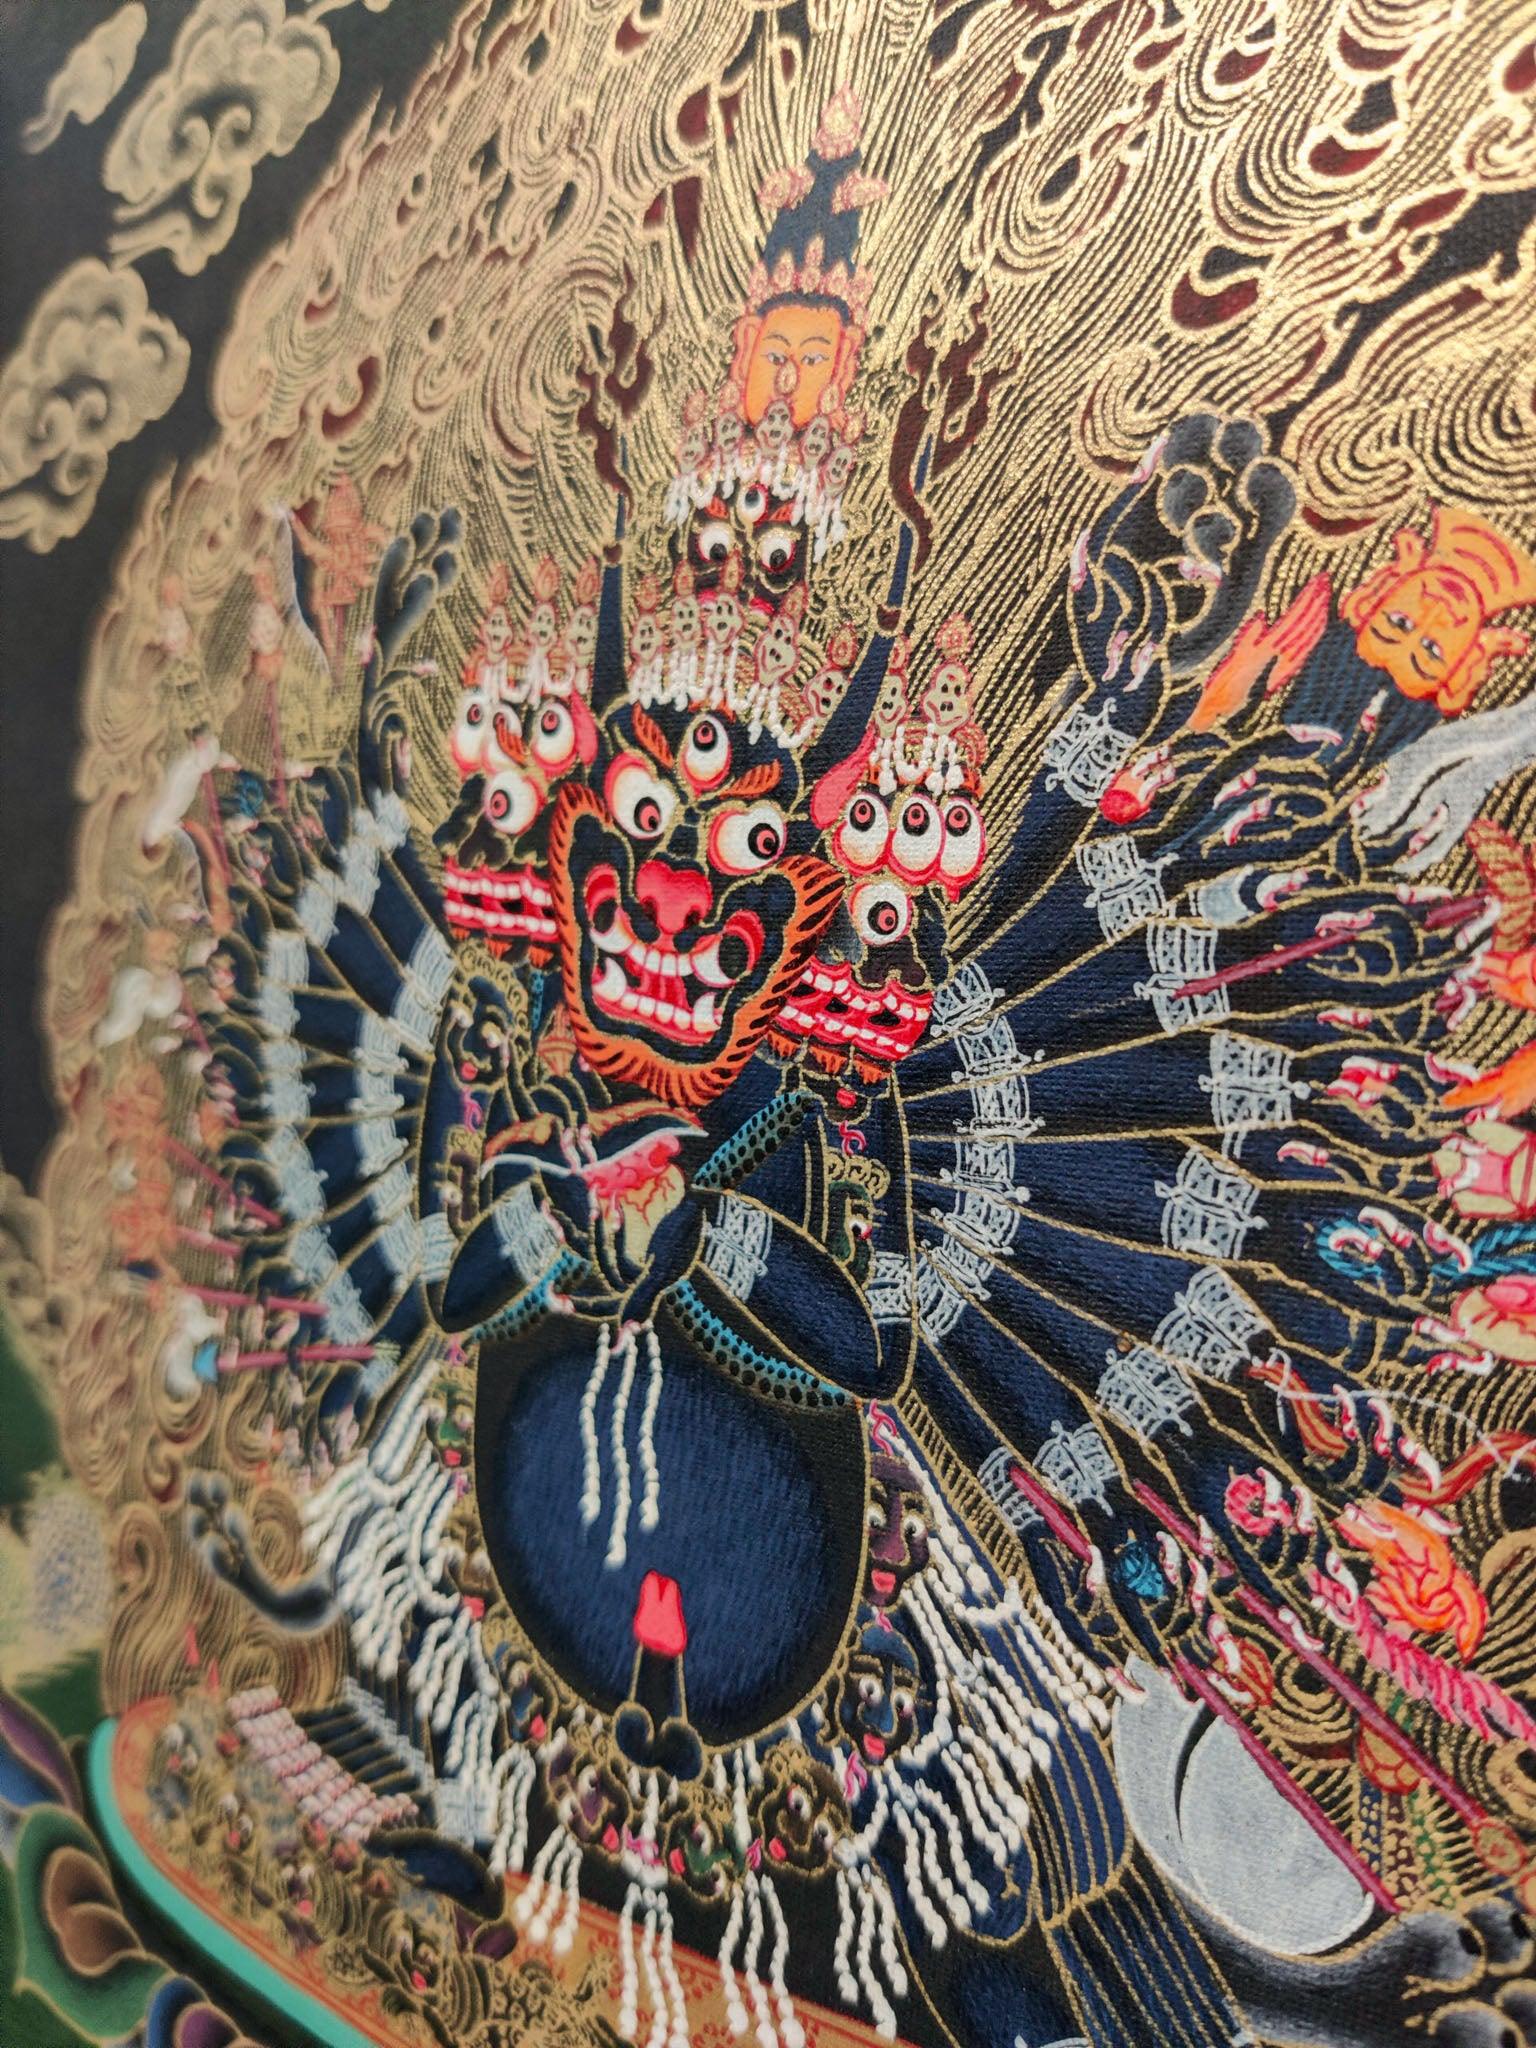 Yamantaka wrathful deity of protector thangka painting